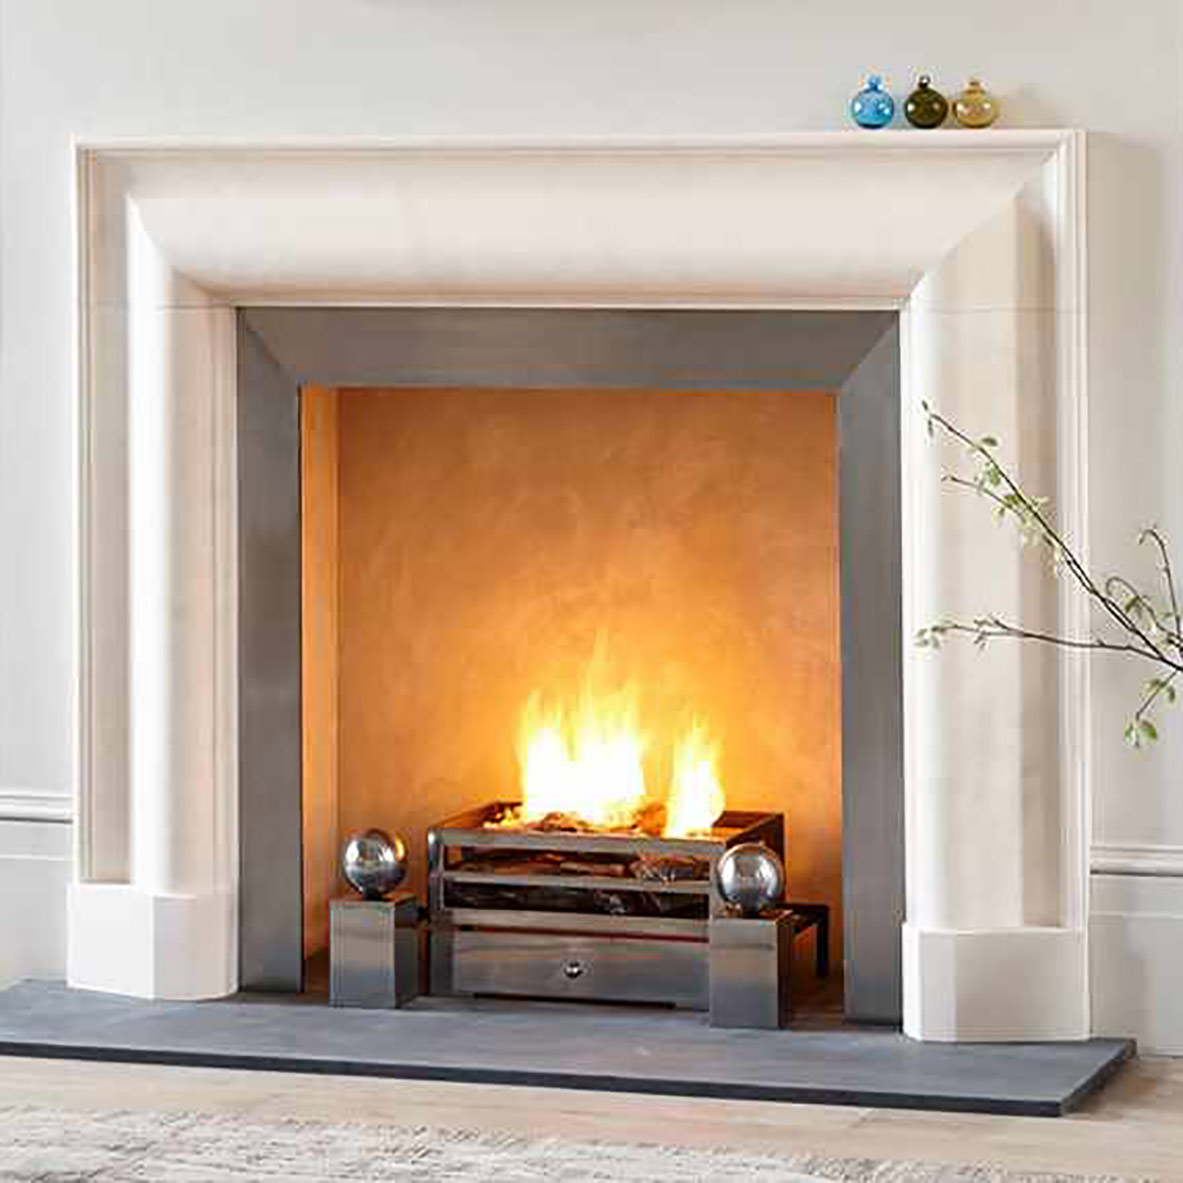 The Kent Bolection fireplace